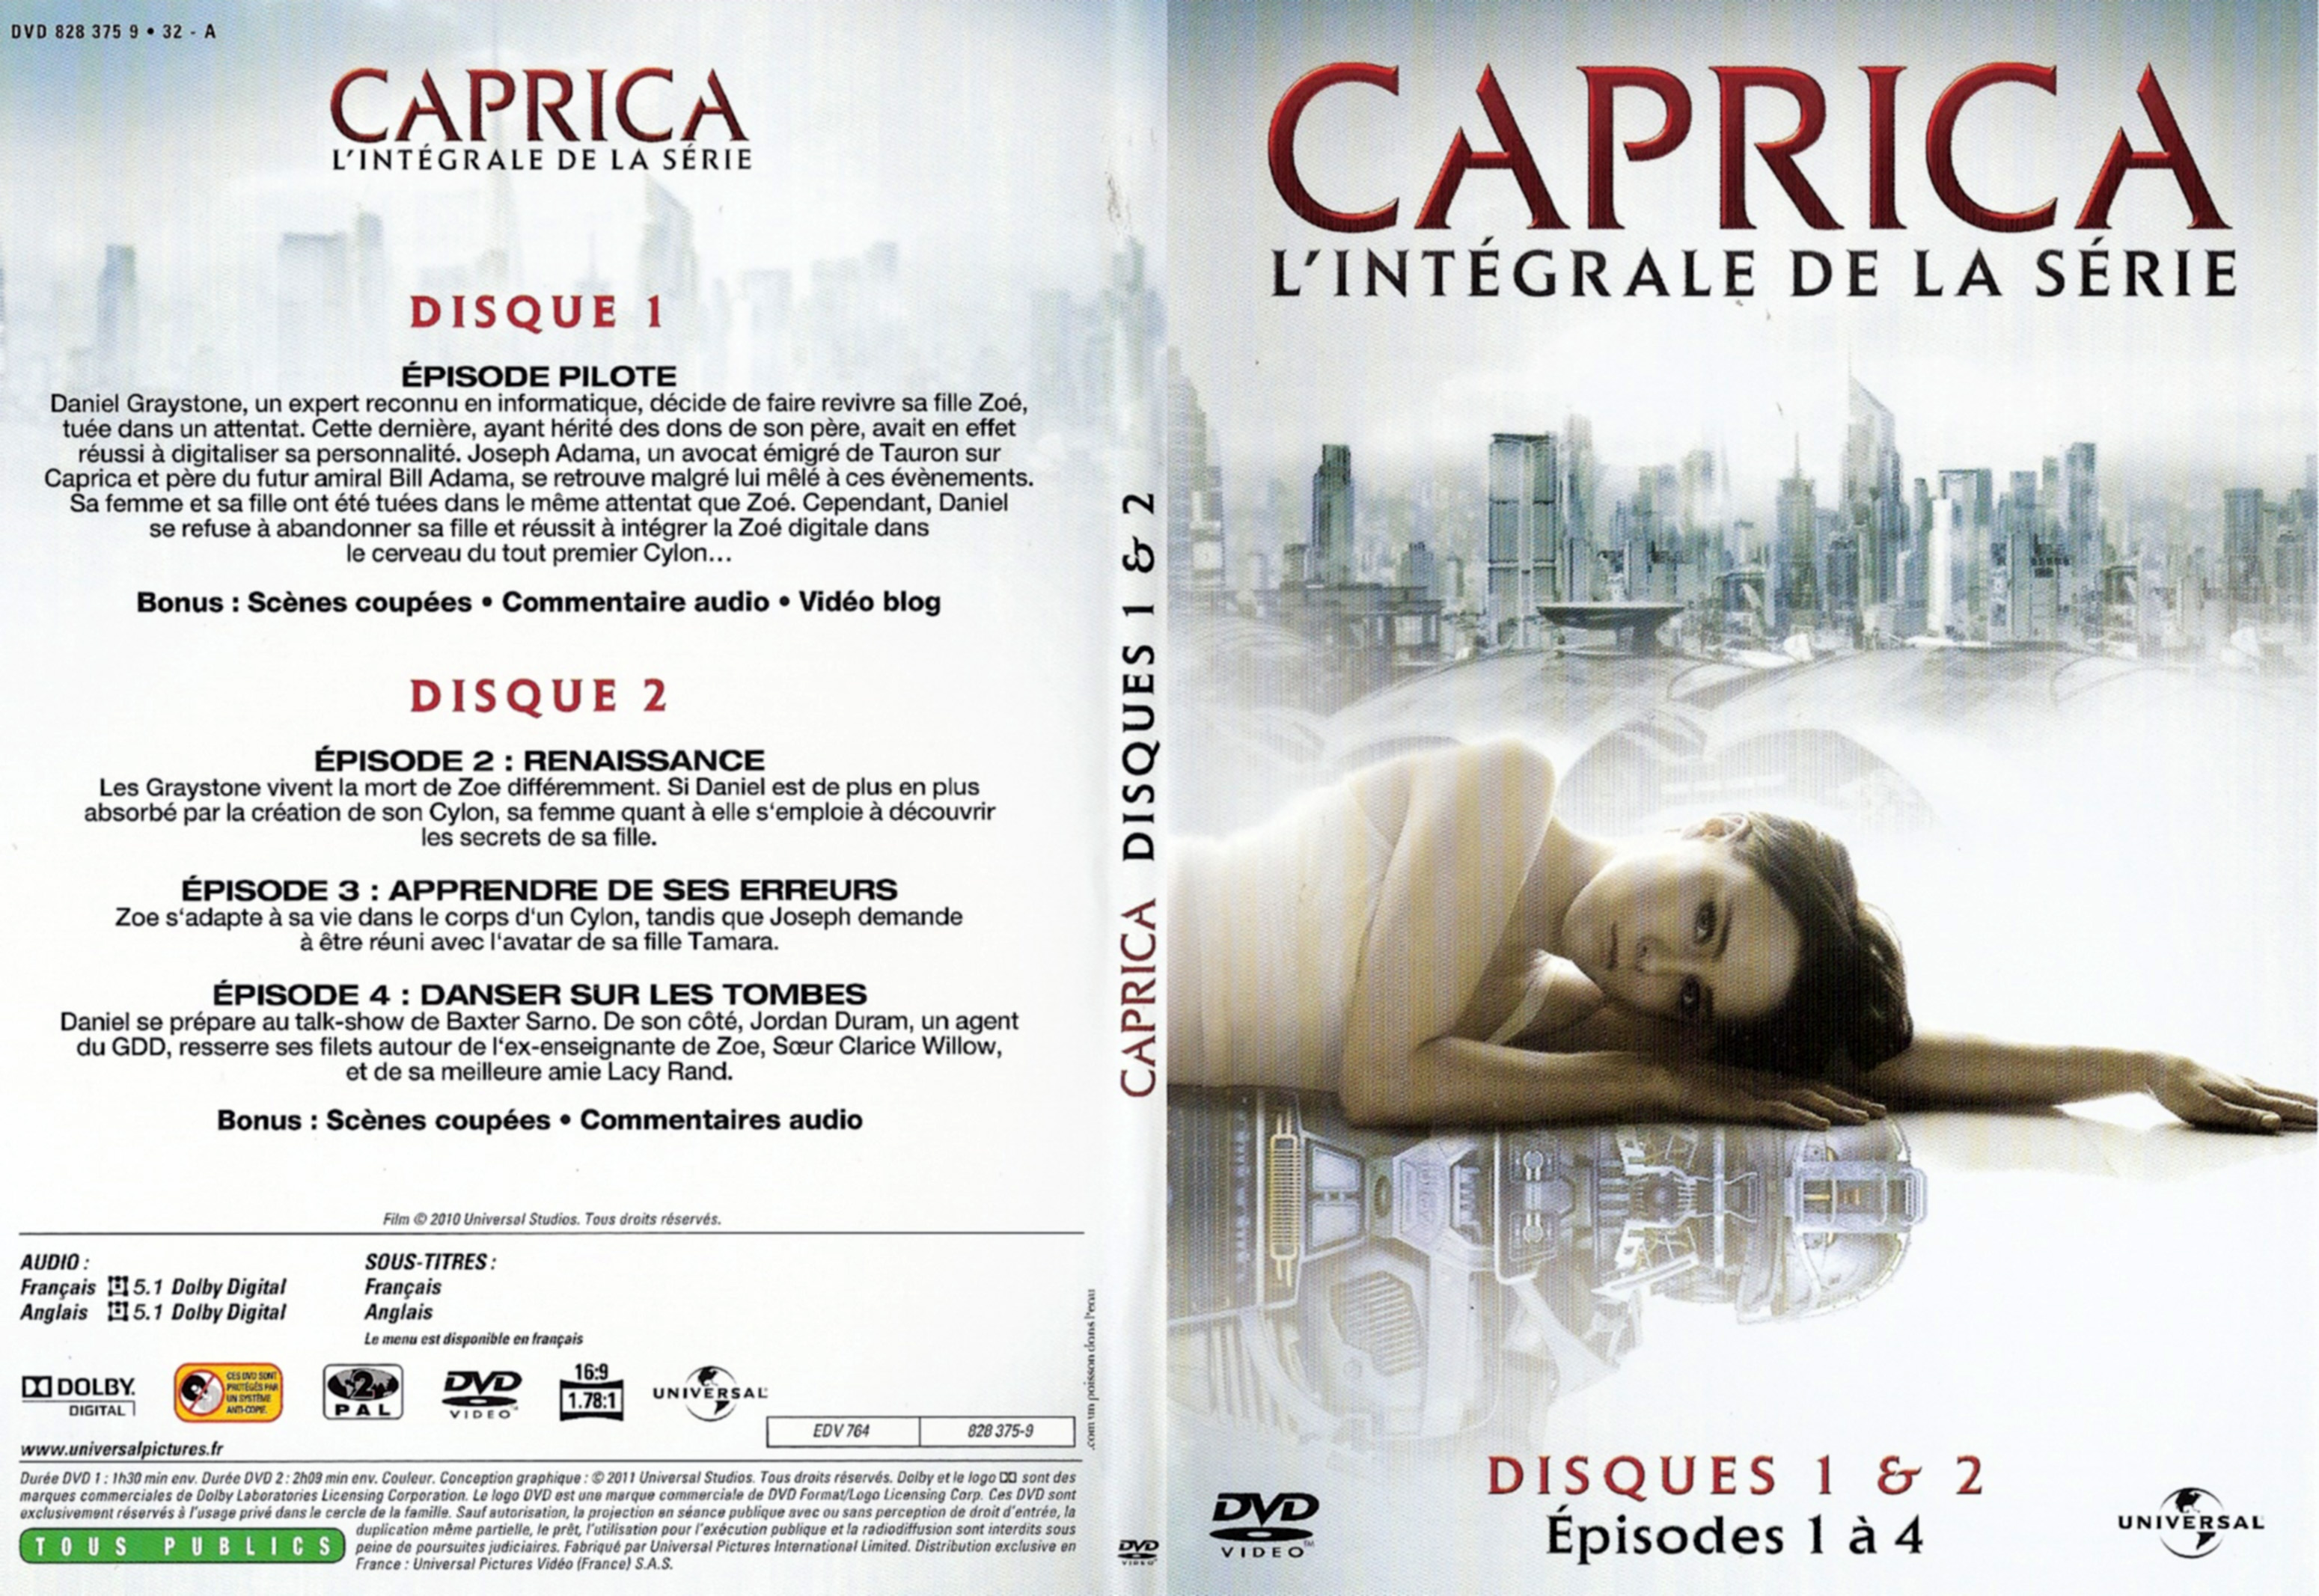 Jaquette DVD Caprica DVD 1